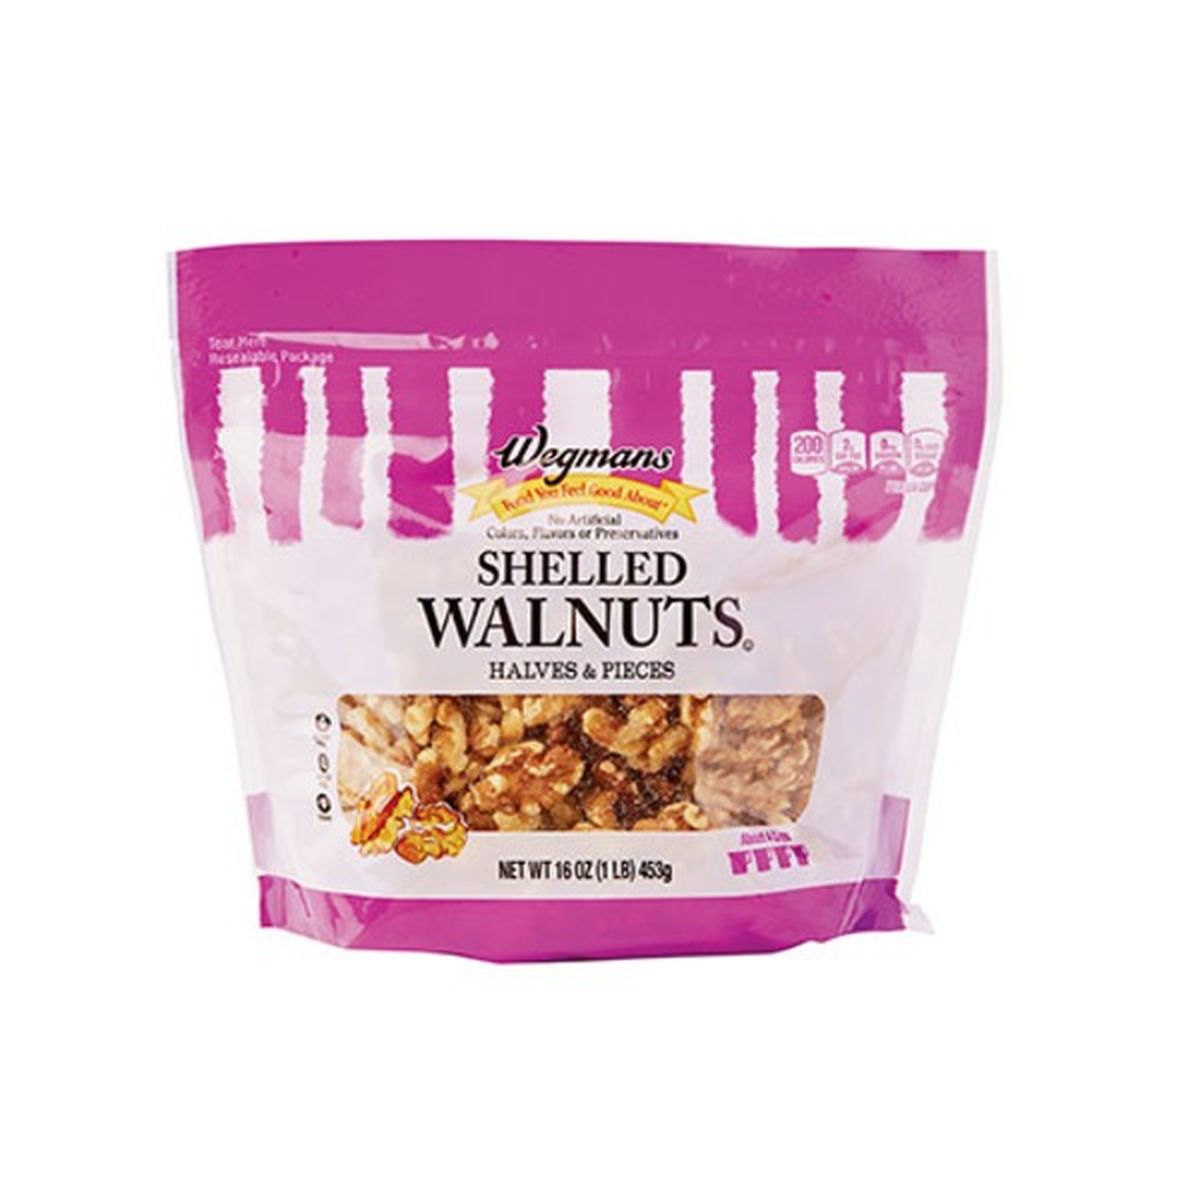 Calories in Wegmans Shelled Walnuts Halves & Pieces